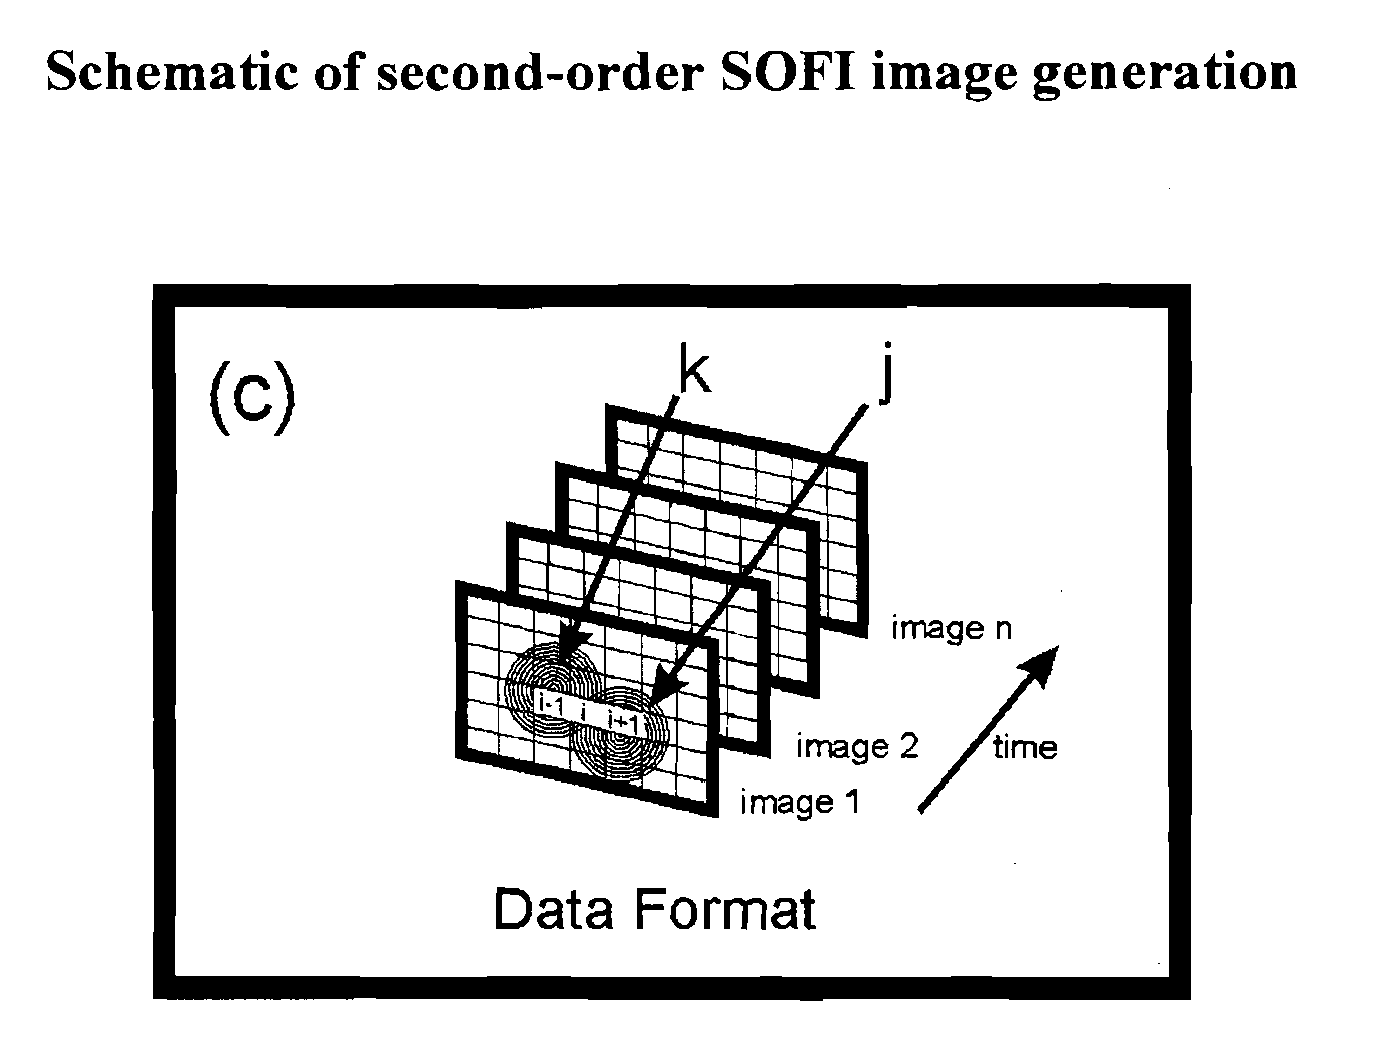 Superresolution Optical Fluctuation Imaging (SOFI)